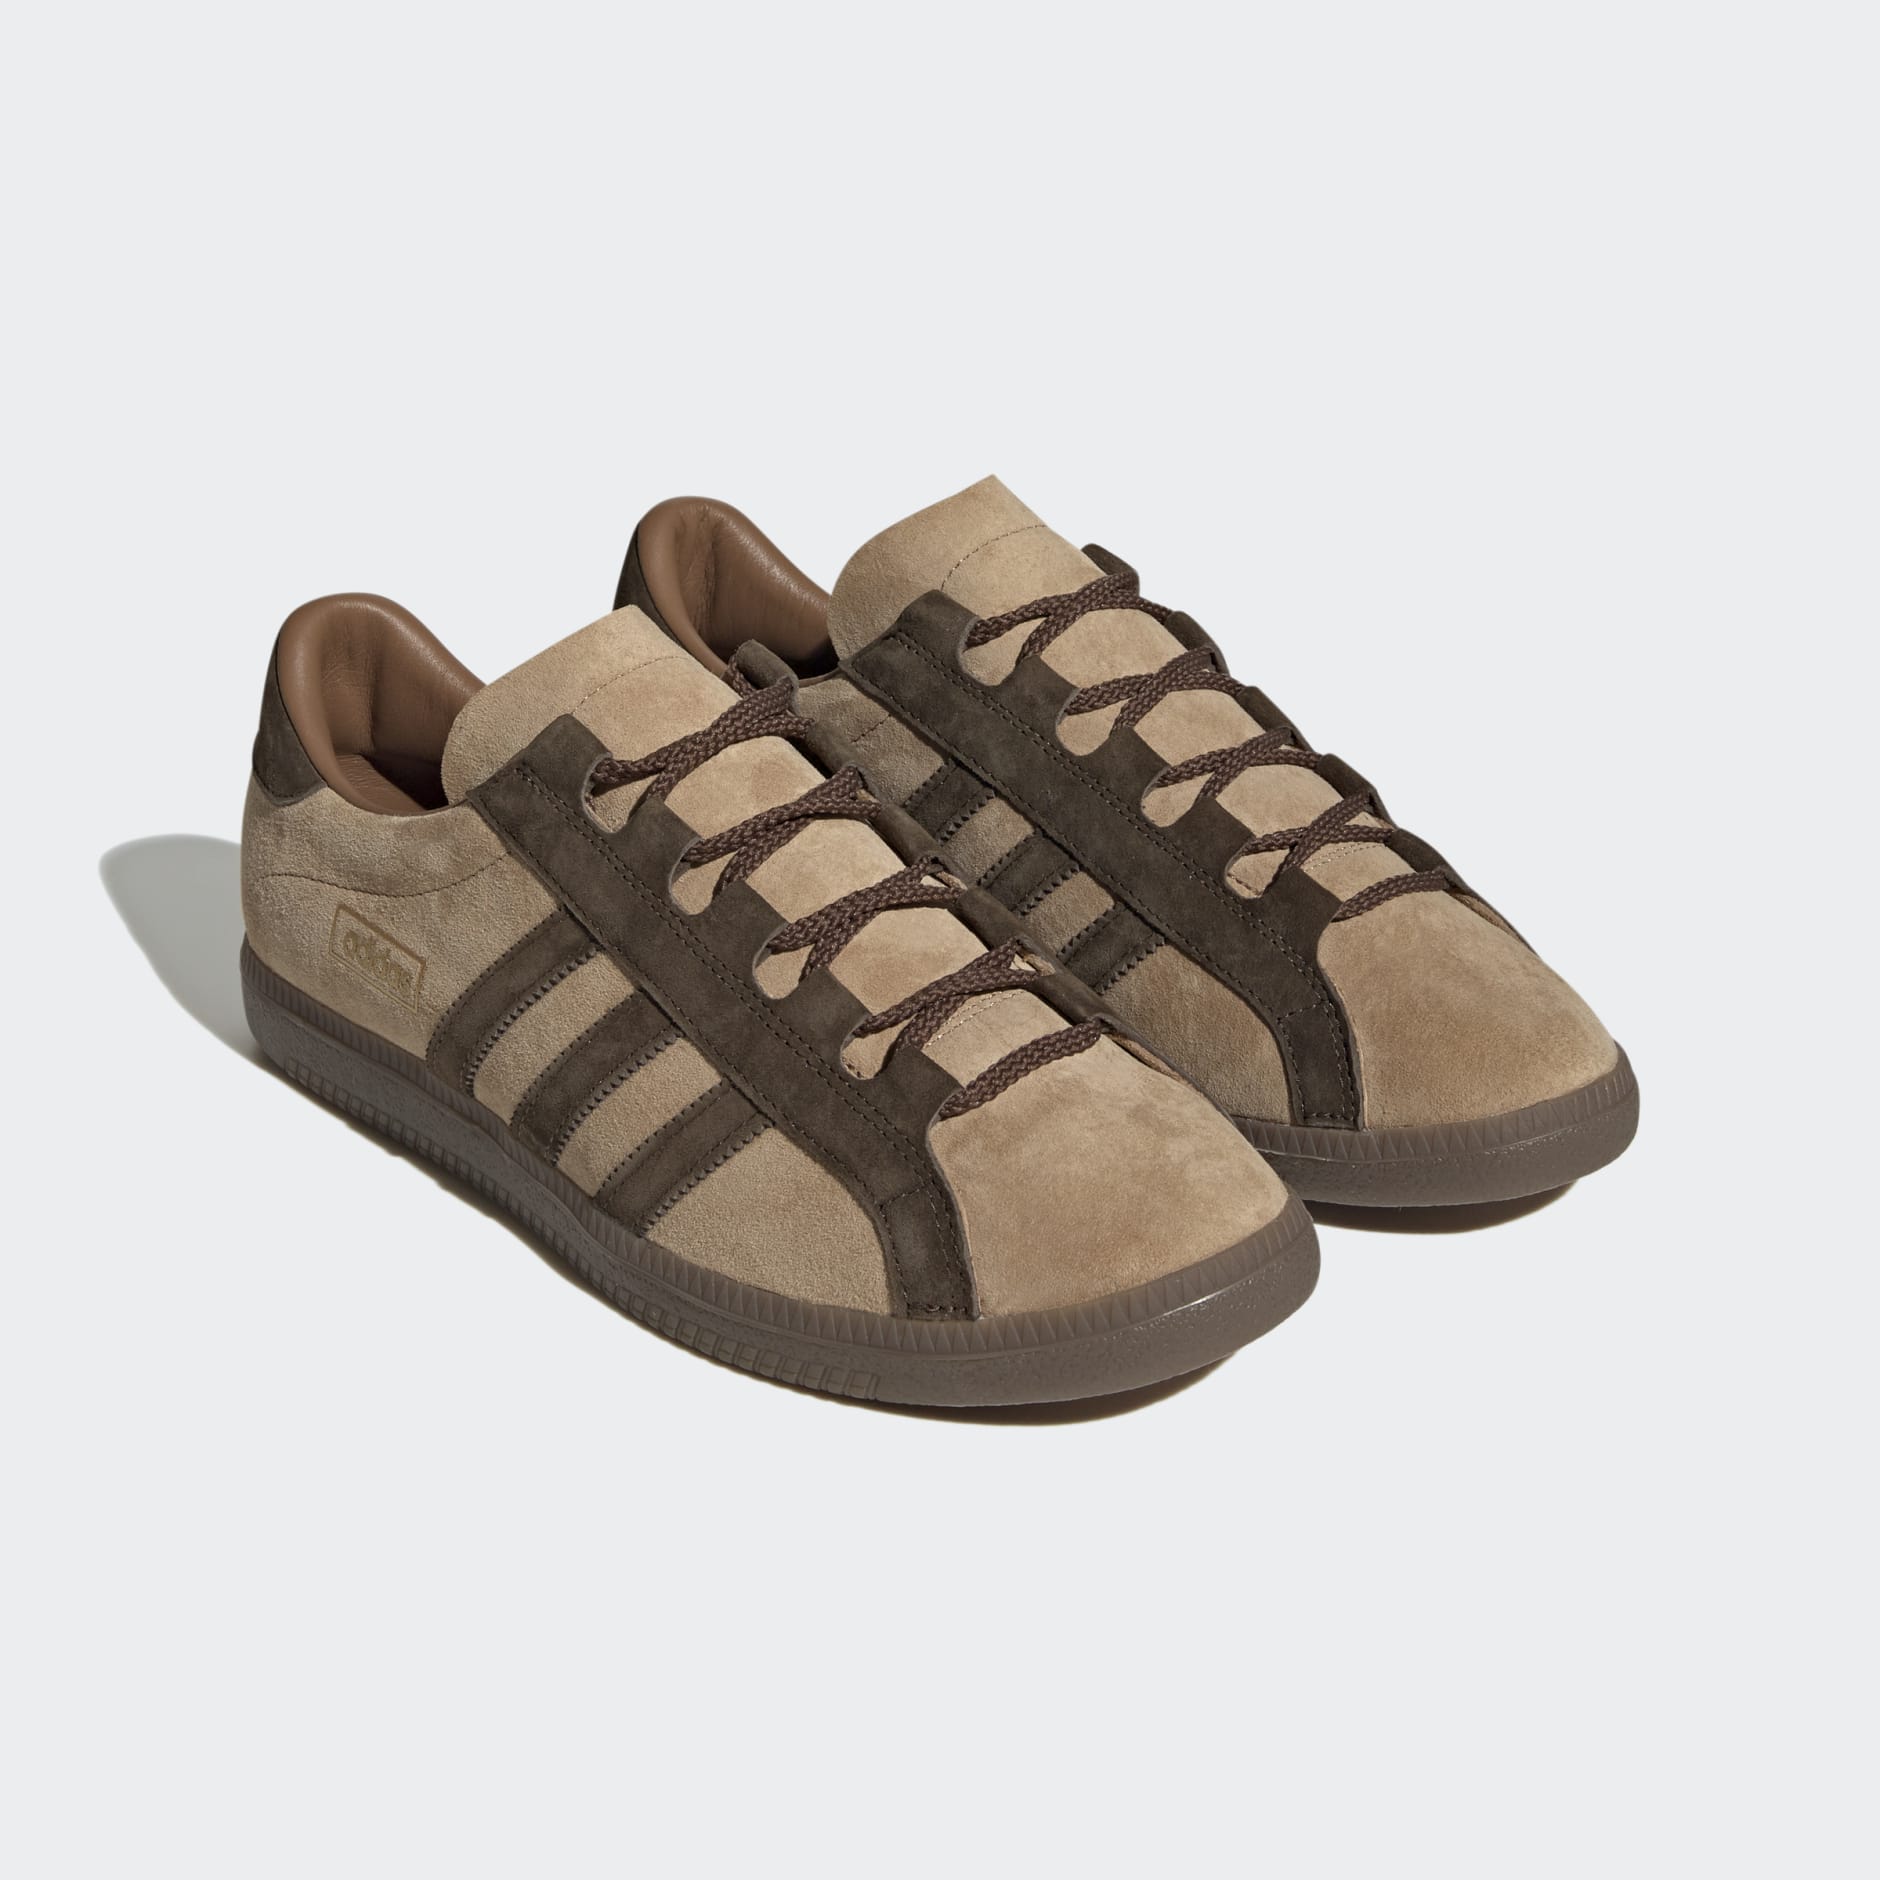 adidas Stapfen SPZL Shoes - Brown | adidas IQ